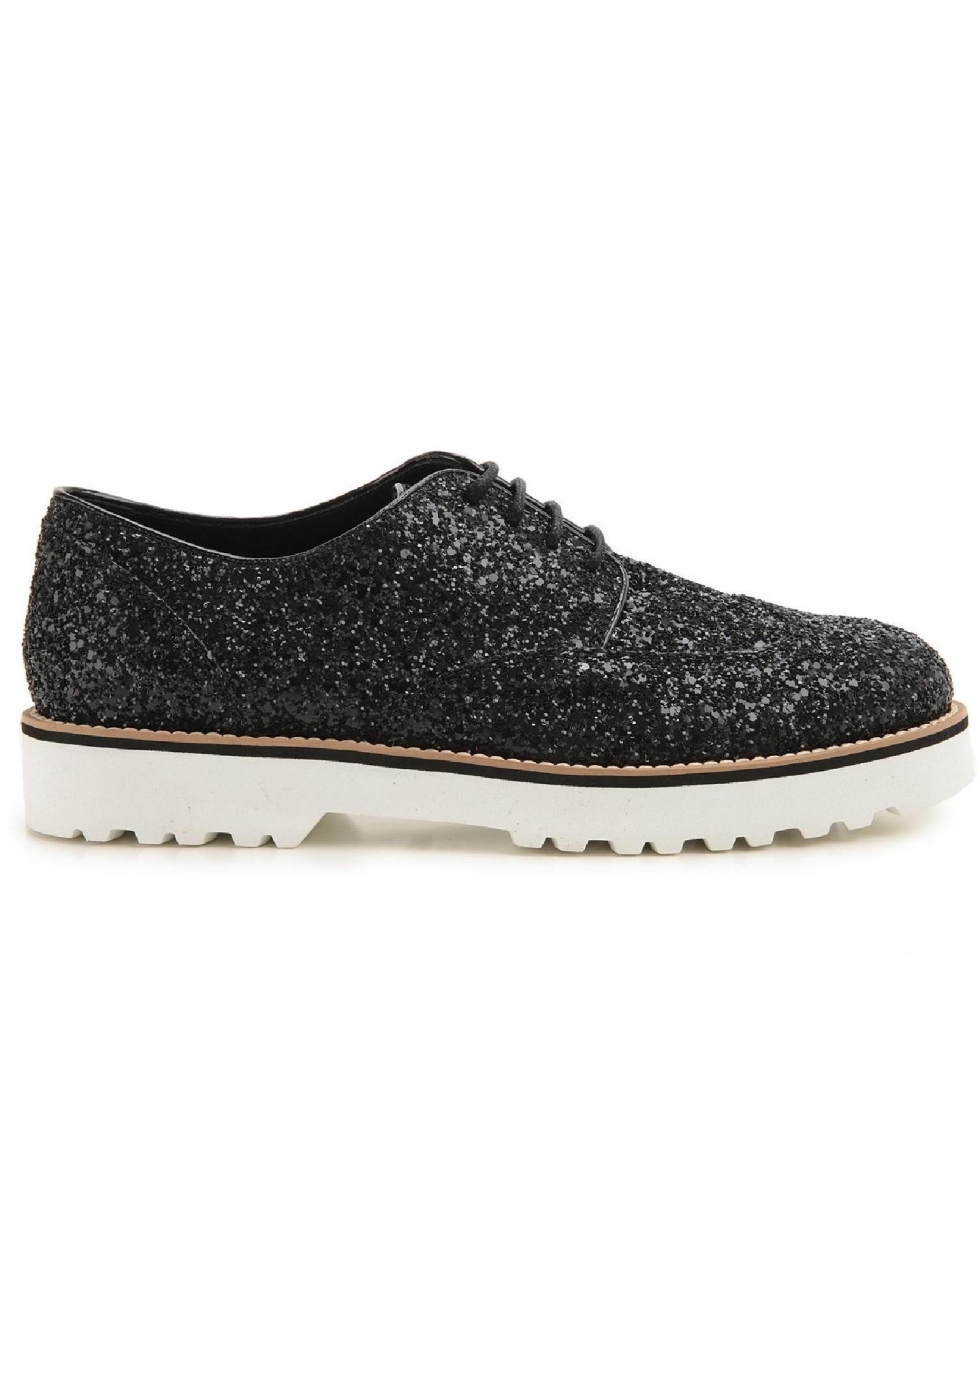 Hogan women's lace-ups shoes in black glitter leather - Italian Boutique